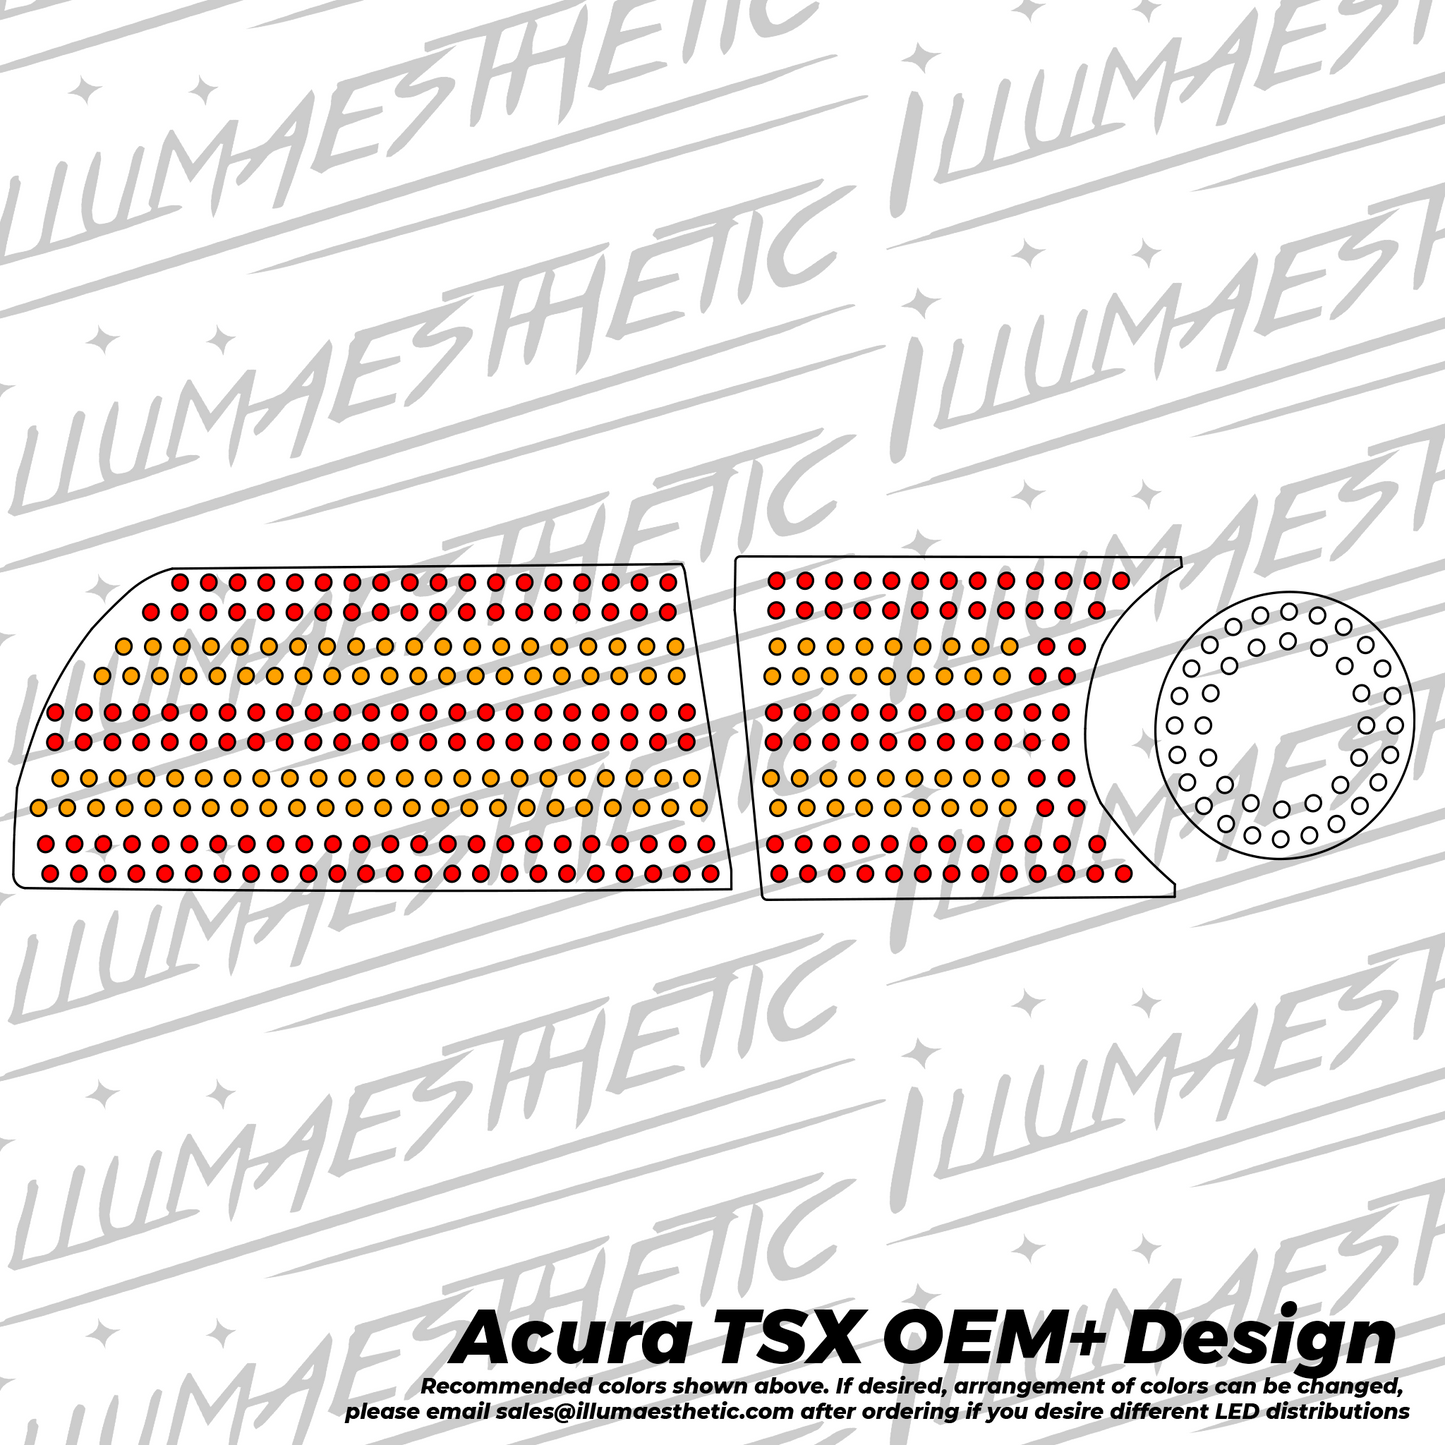 Acura TSX/Honda Accord Euro (CL9) - Complete DIY Kit